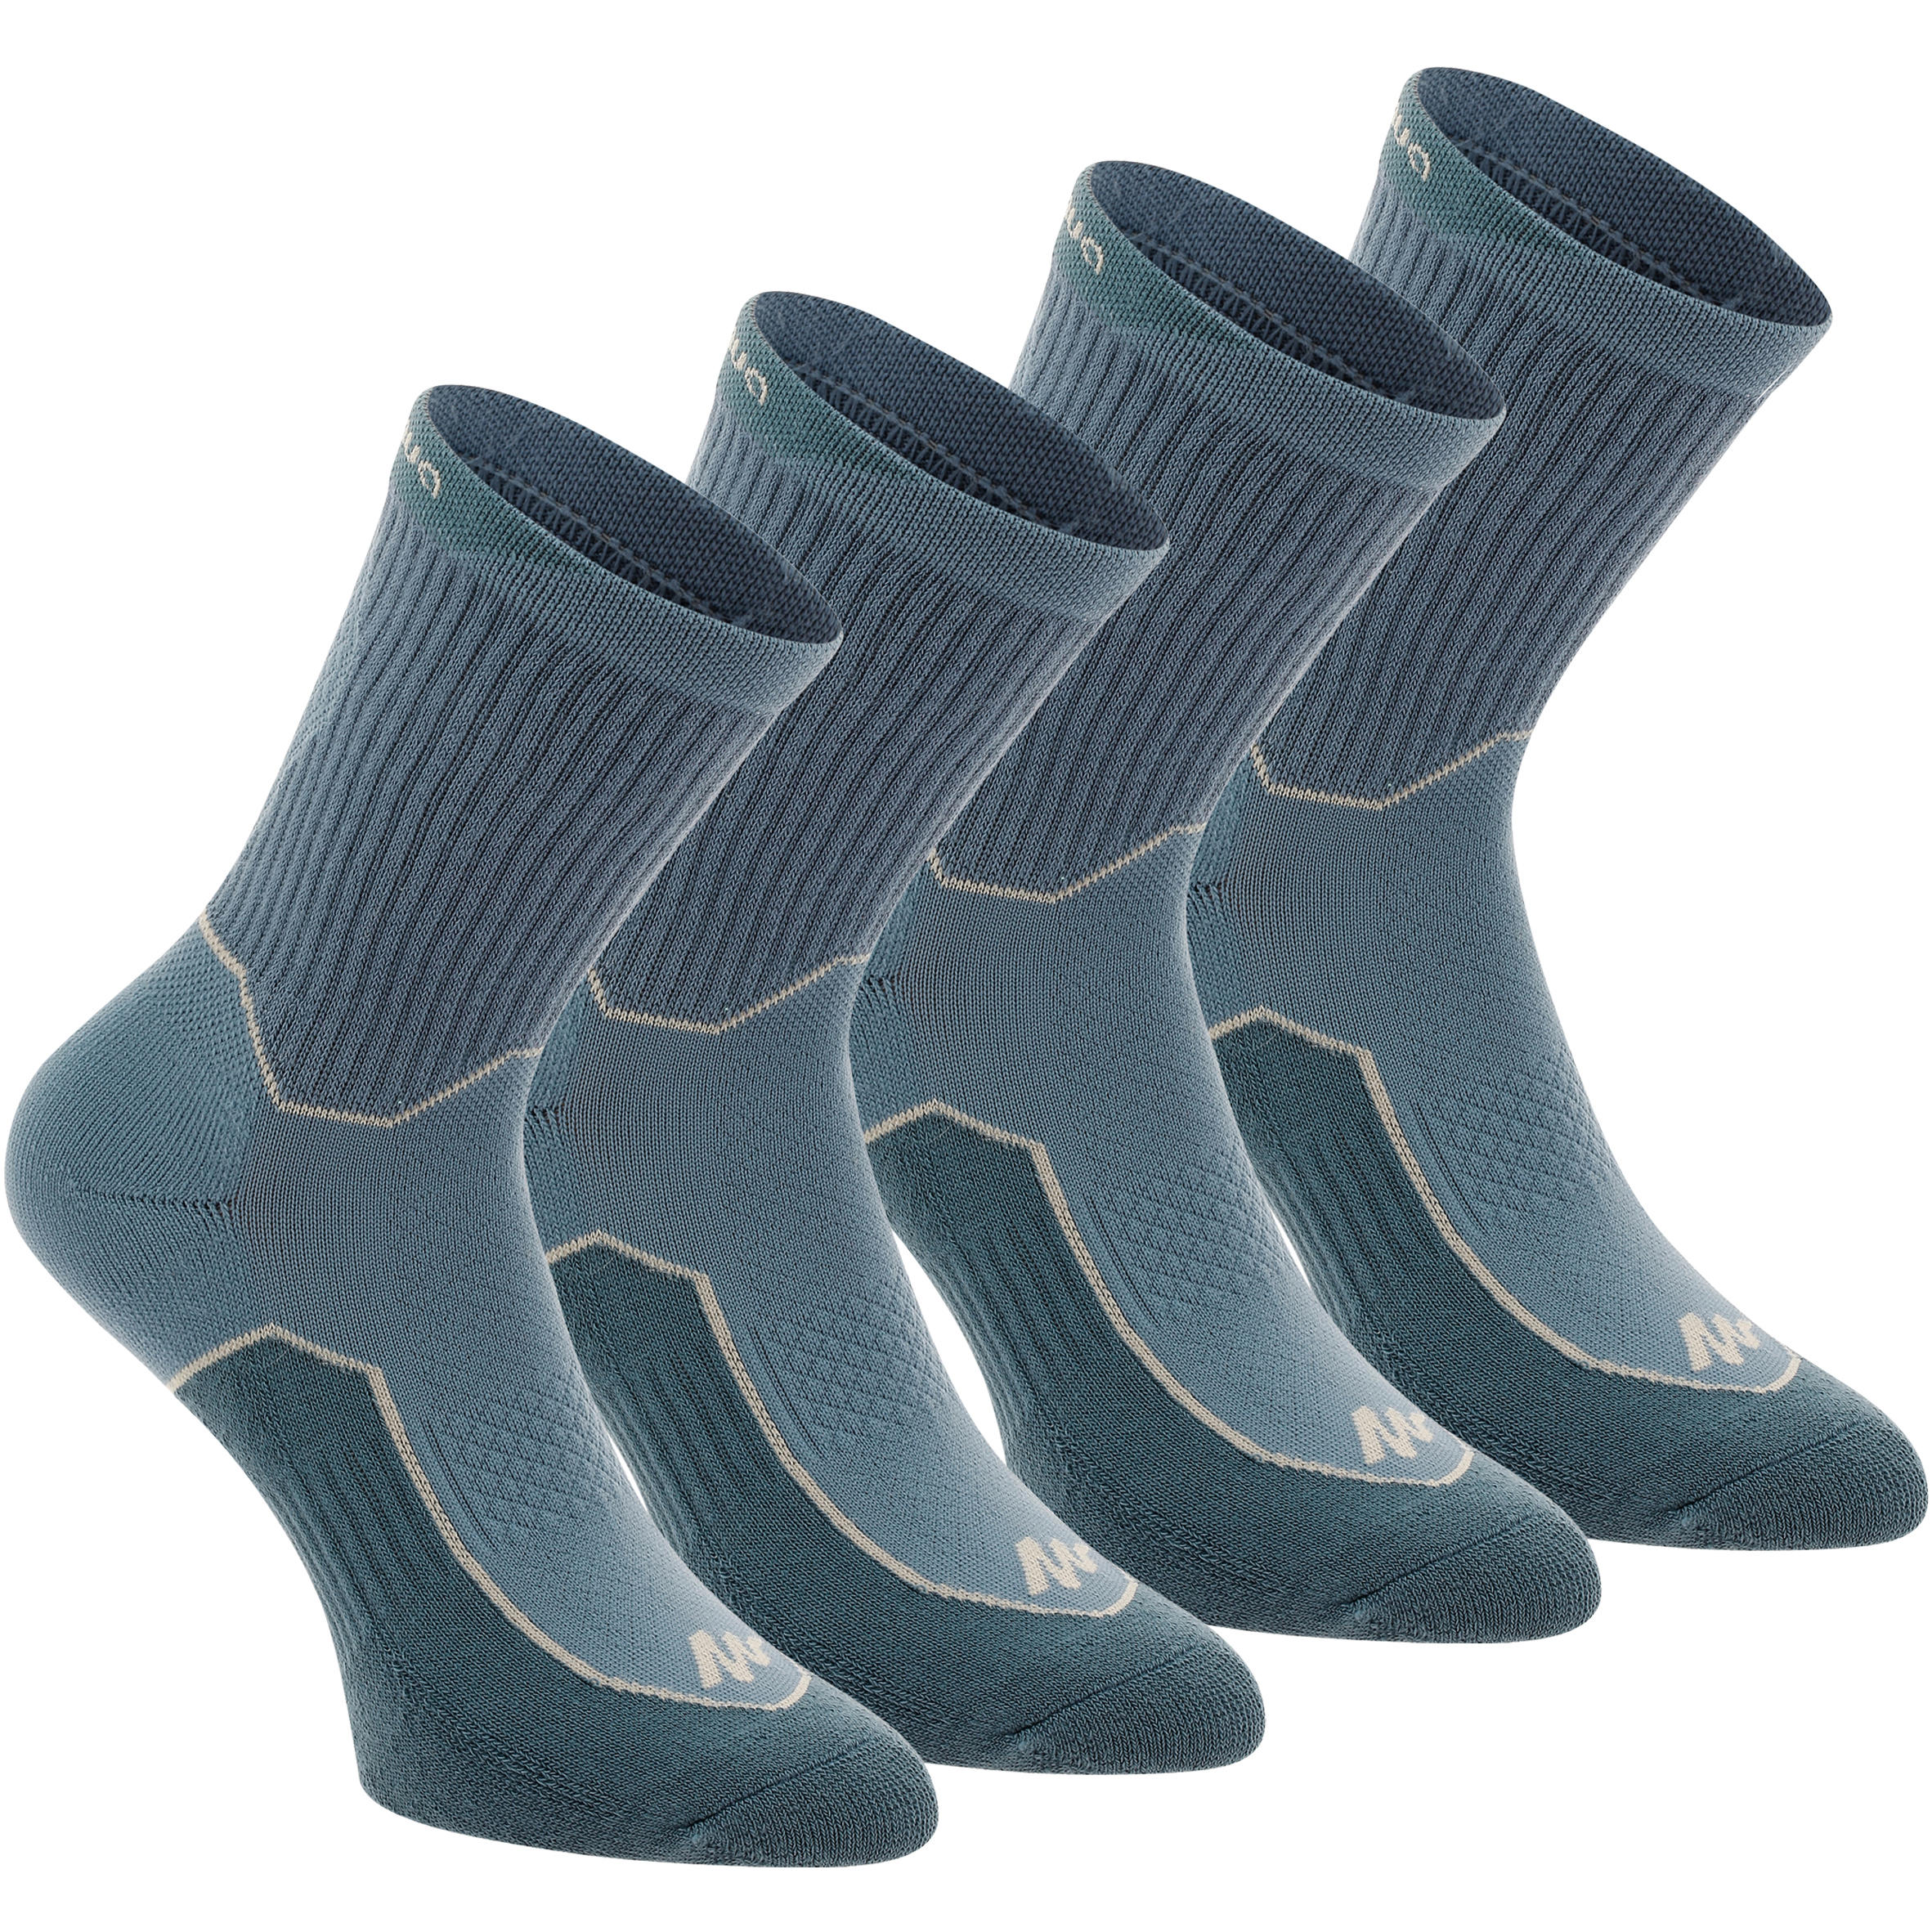 QUECHUA Arpenaz 100 Adult High cut Nature Hiking Socks 2 pairs - Blue.